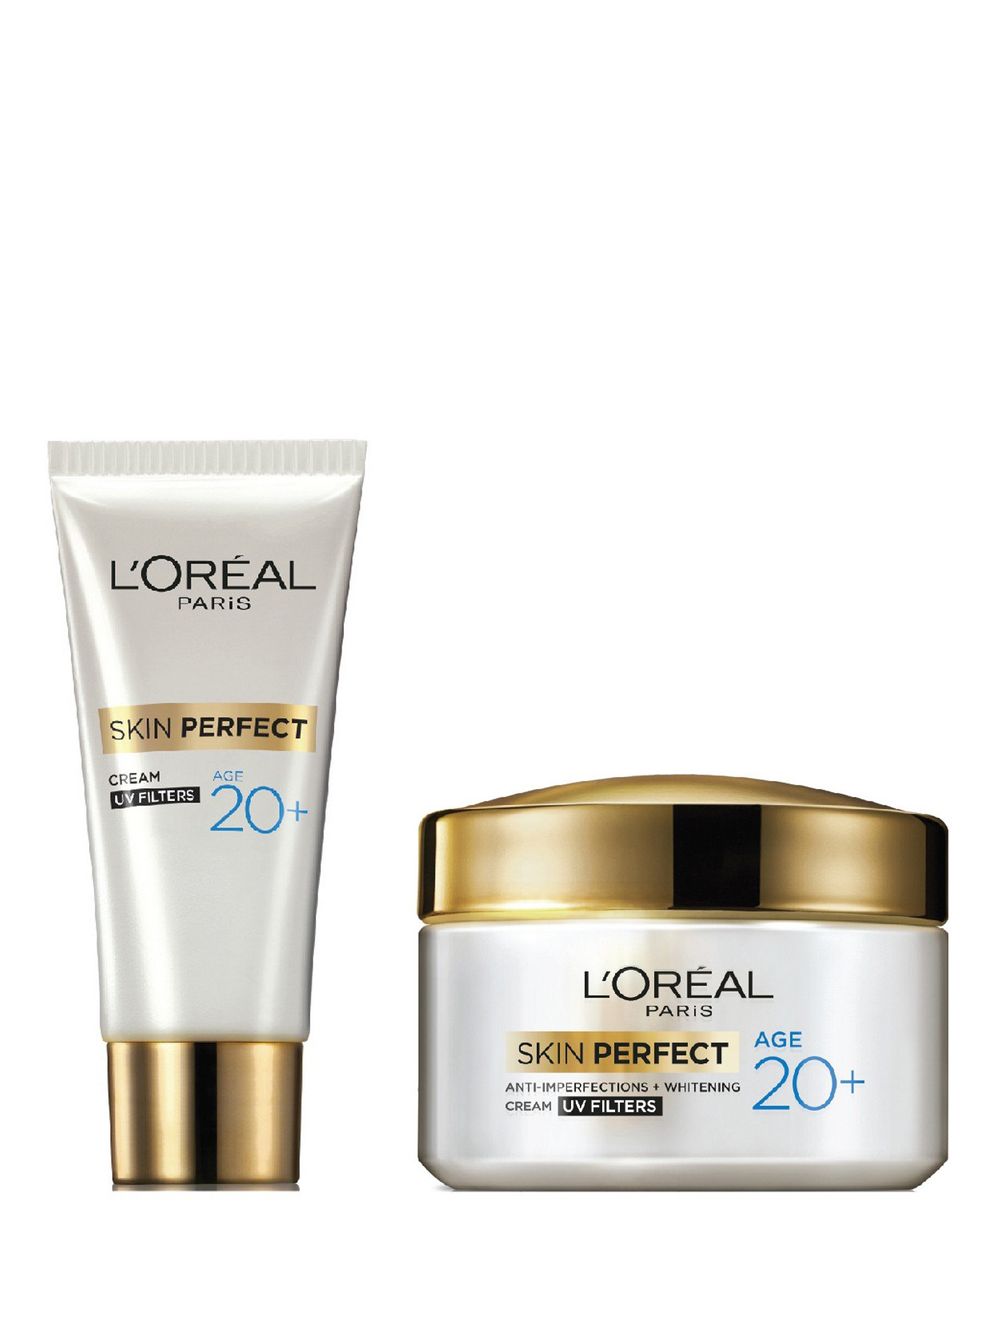 L'Oreal Paris Age 20+ Skin Perfect Cream UV Filters-18 gm - Niram